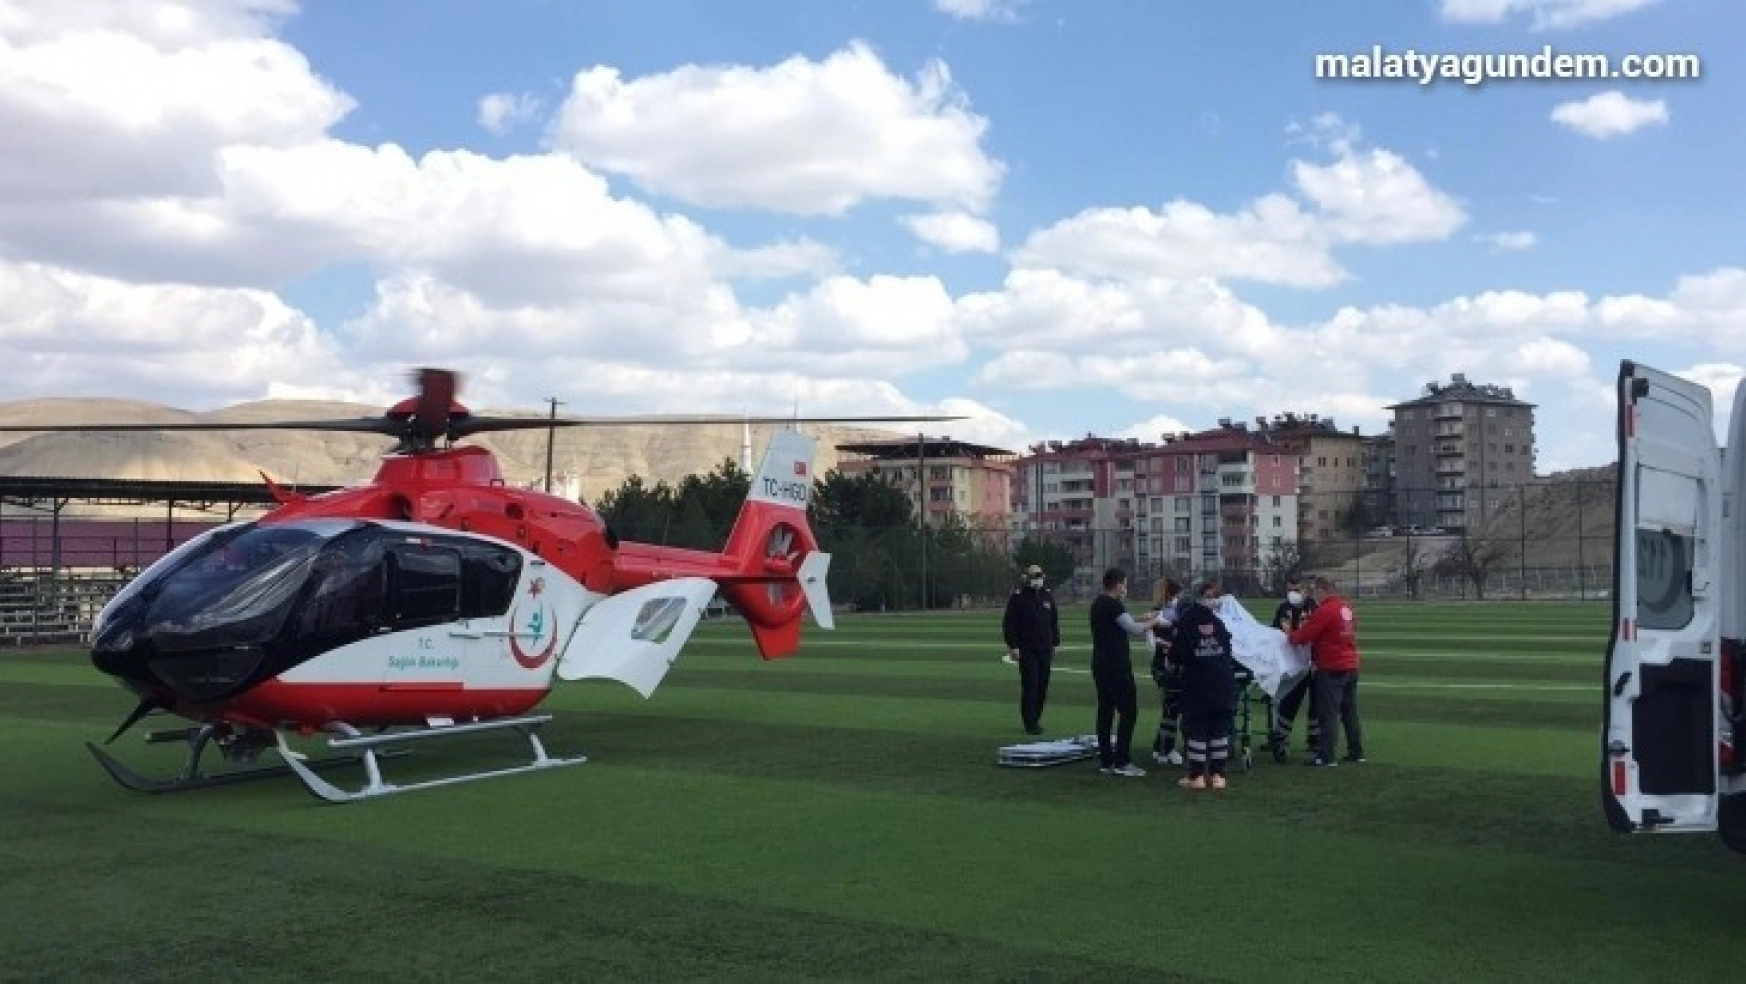 Ağır yaralanan kişinin imdadına hava ambulansı yetişti